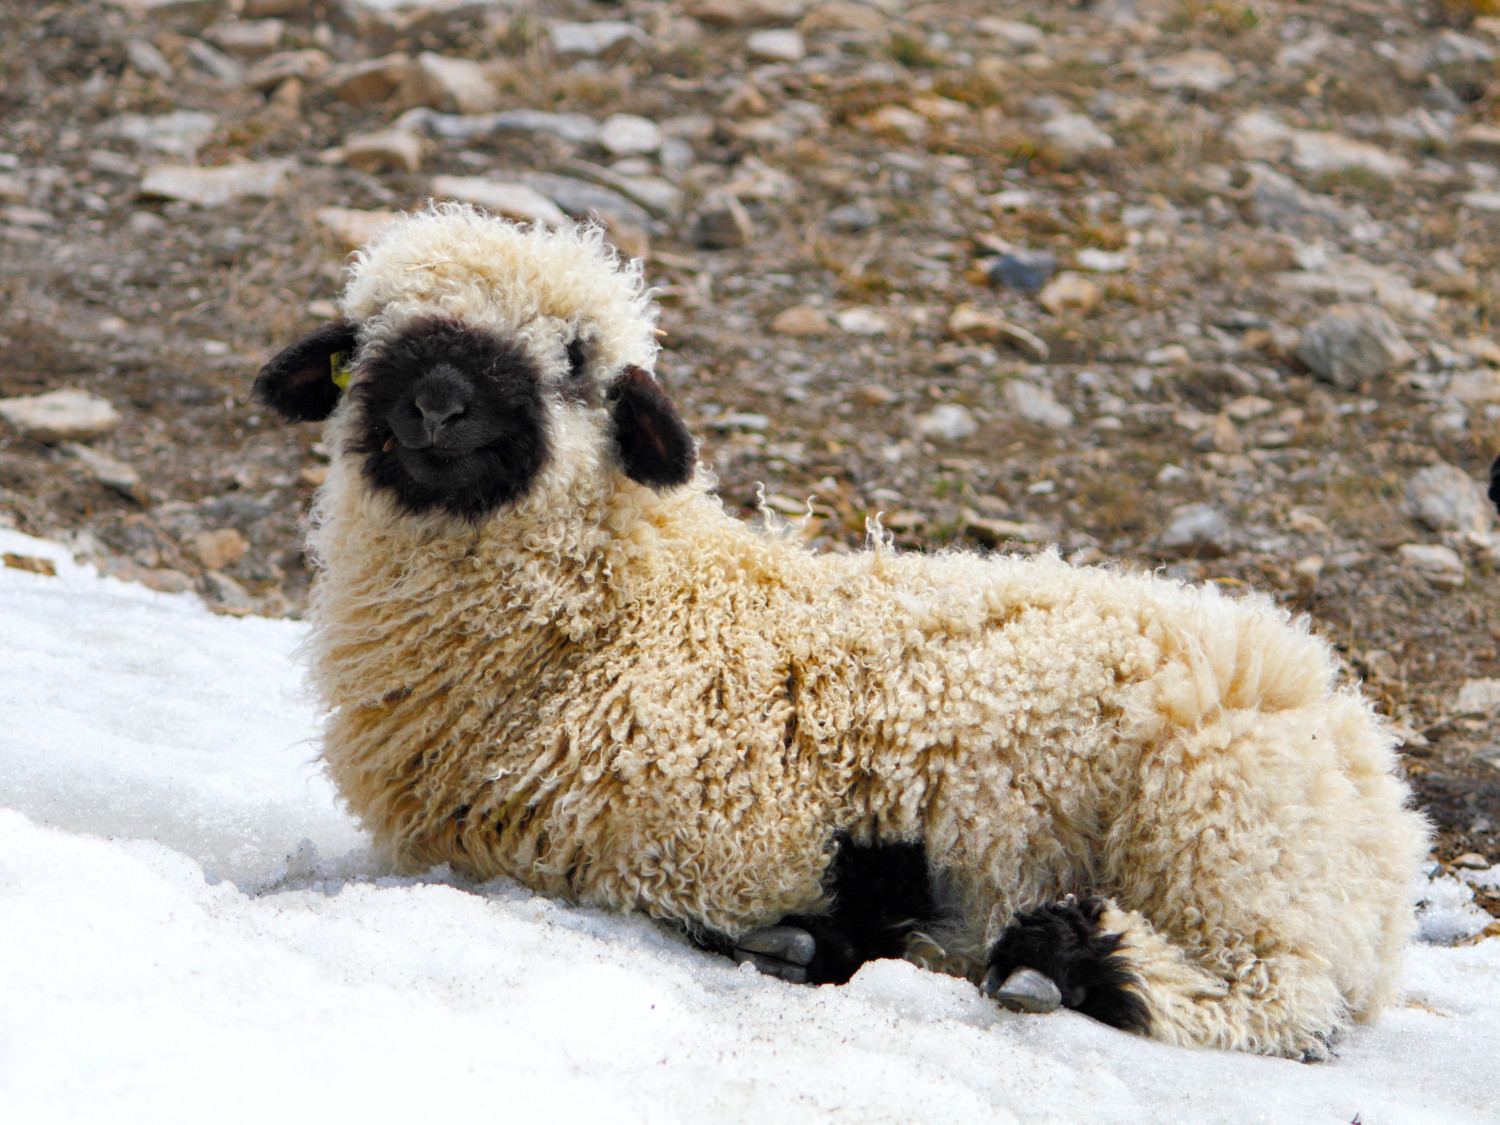 Valais Blacknose Sheep Look Like Stuffed Animals - Simplemost